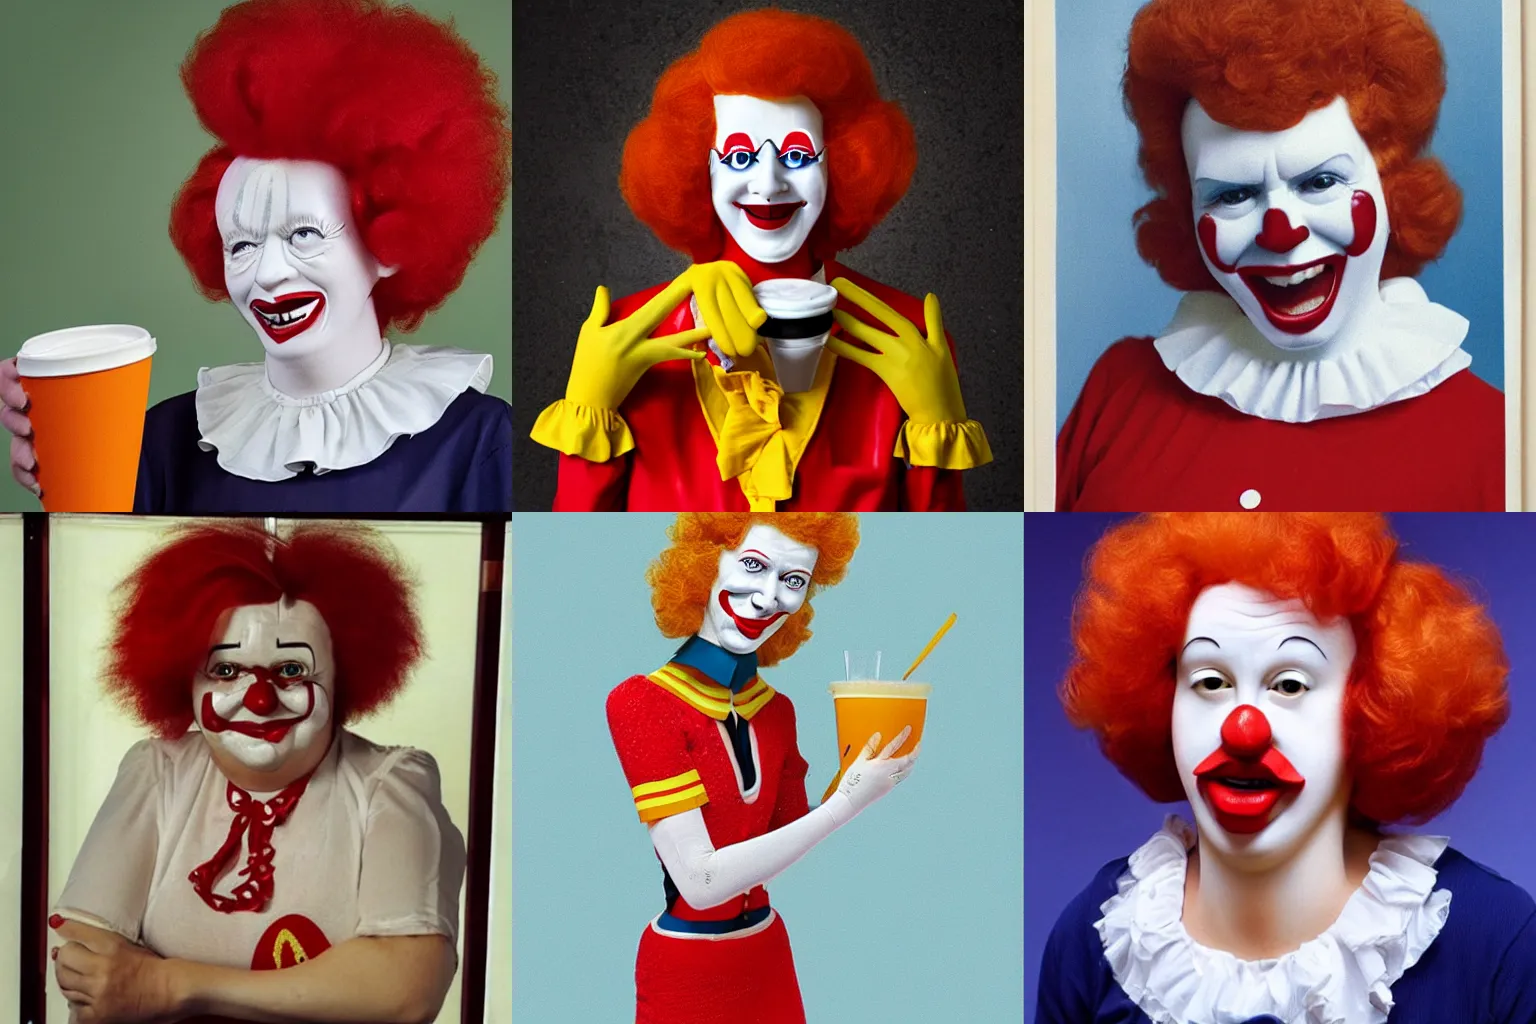 Prompt: Ronald McDonald as a woman